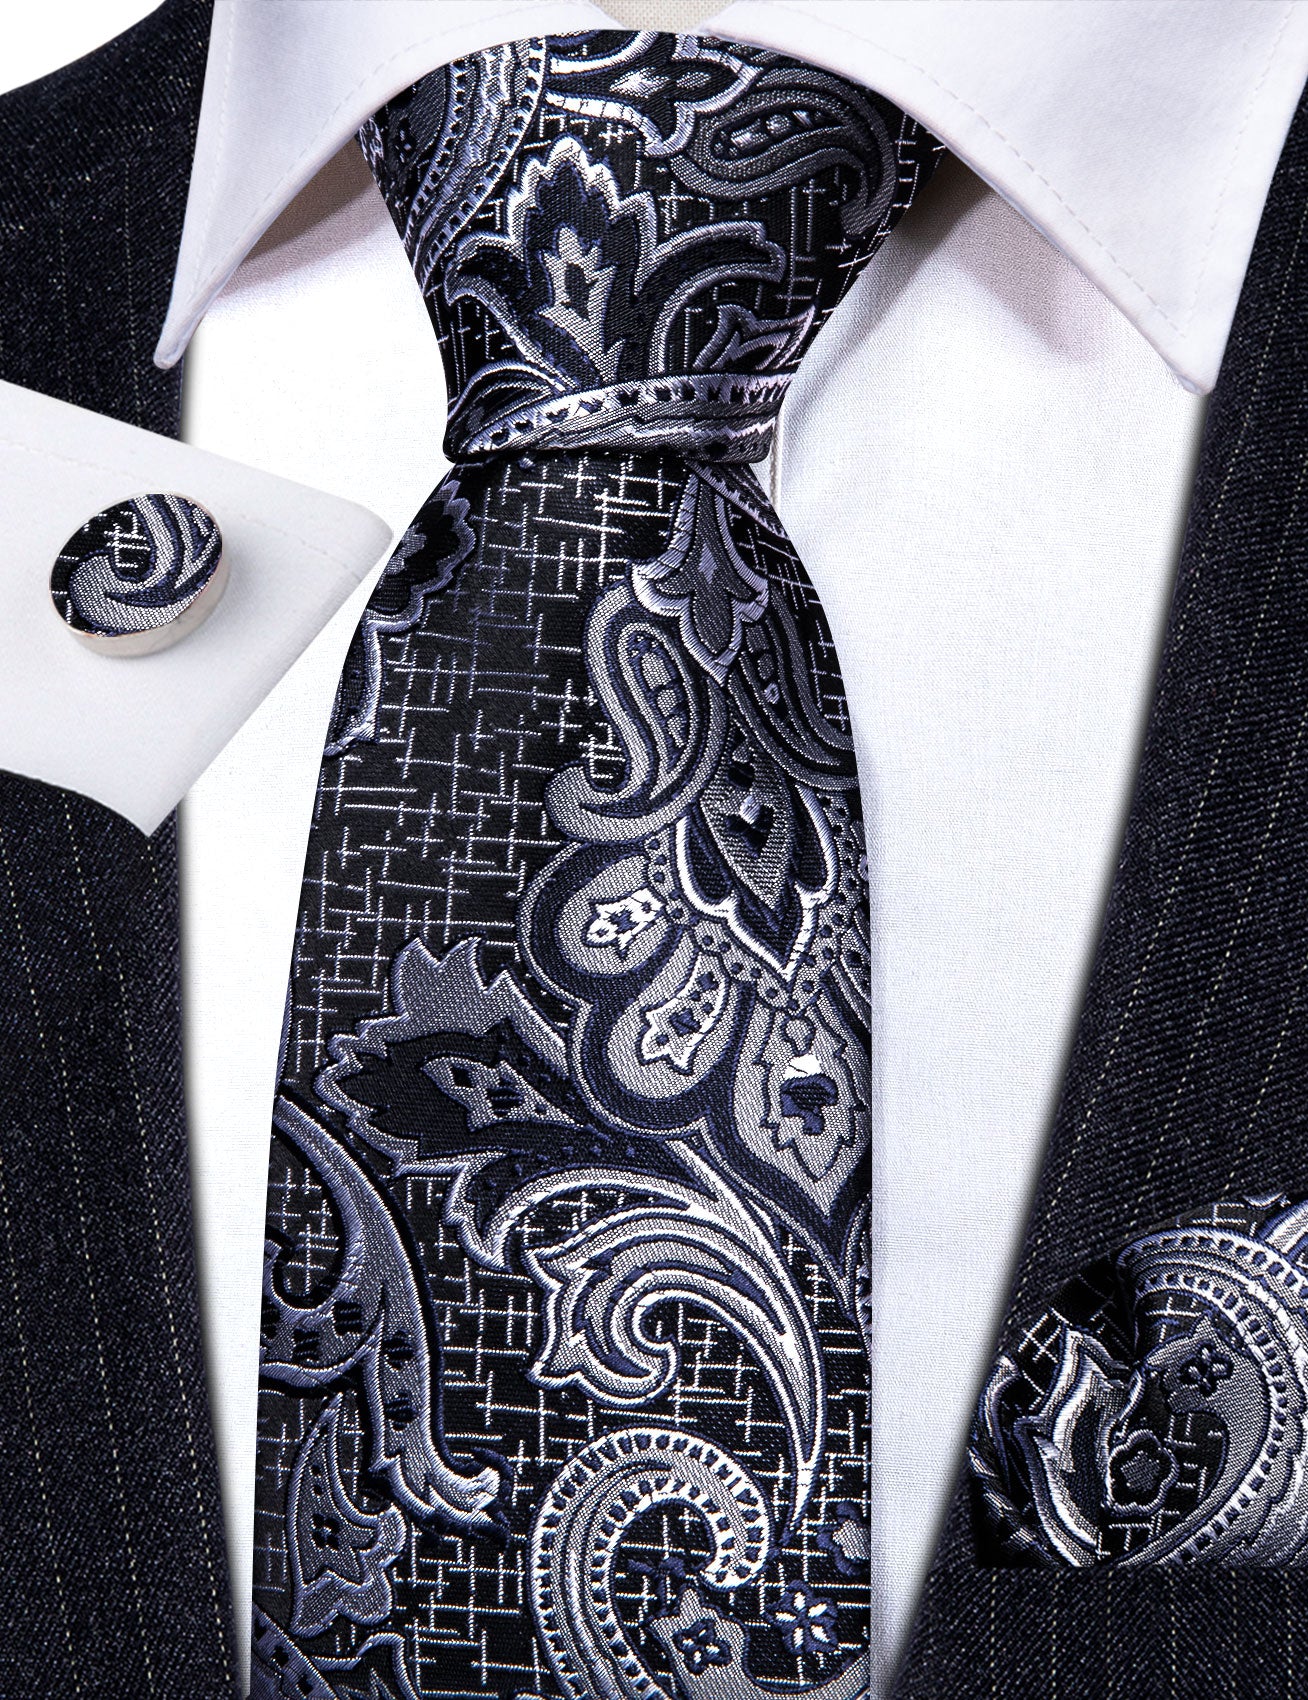 Black Silver Paisley Silk Tie Handkerchief Cufflinks Set